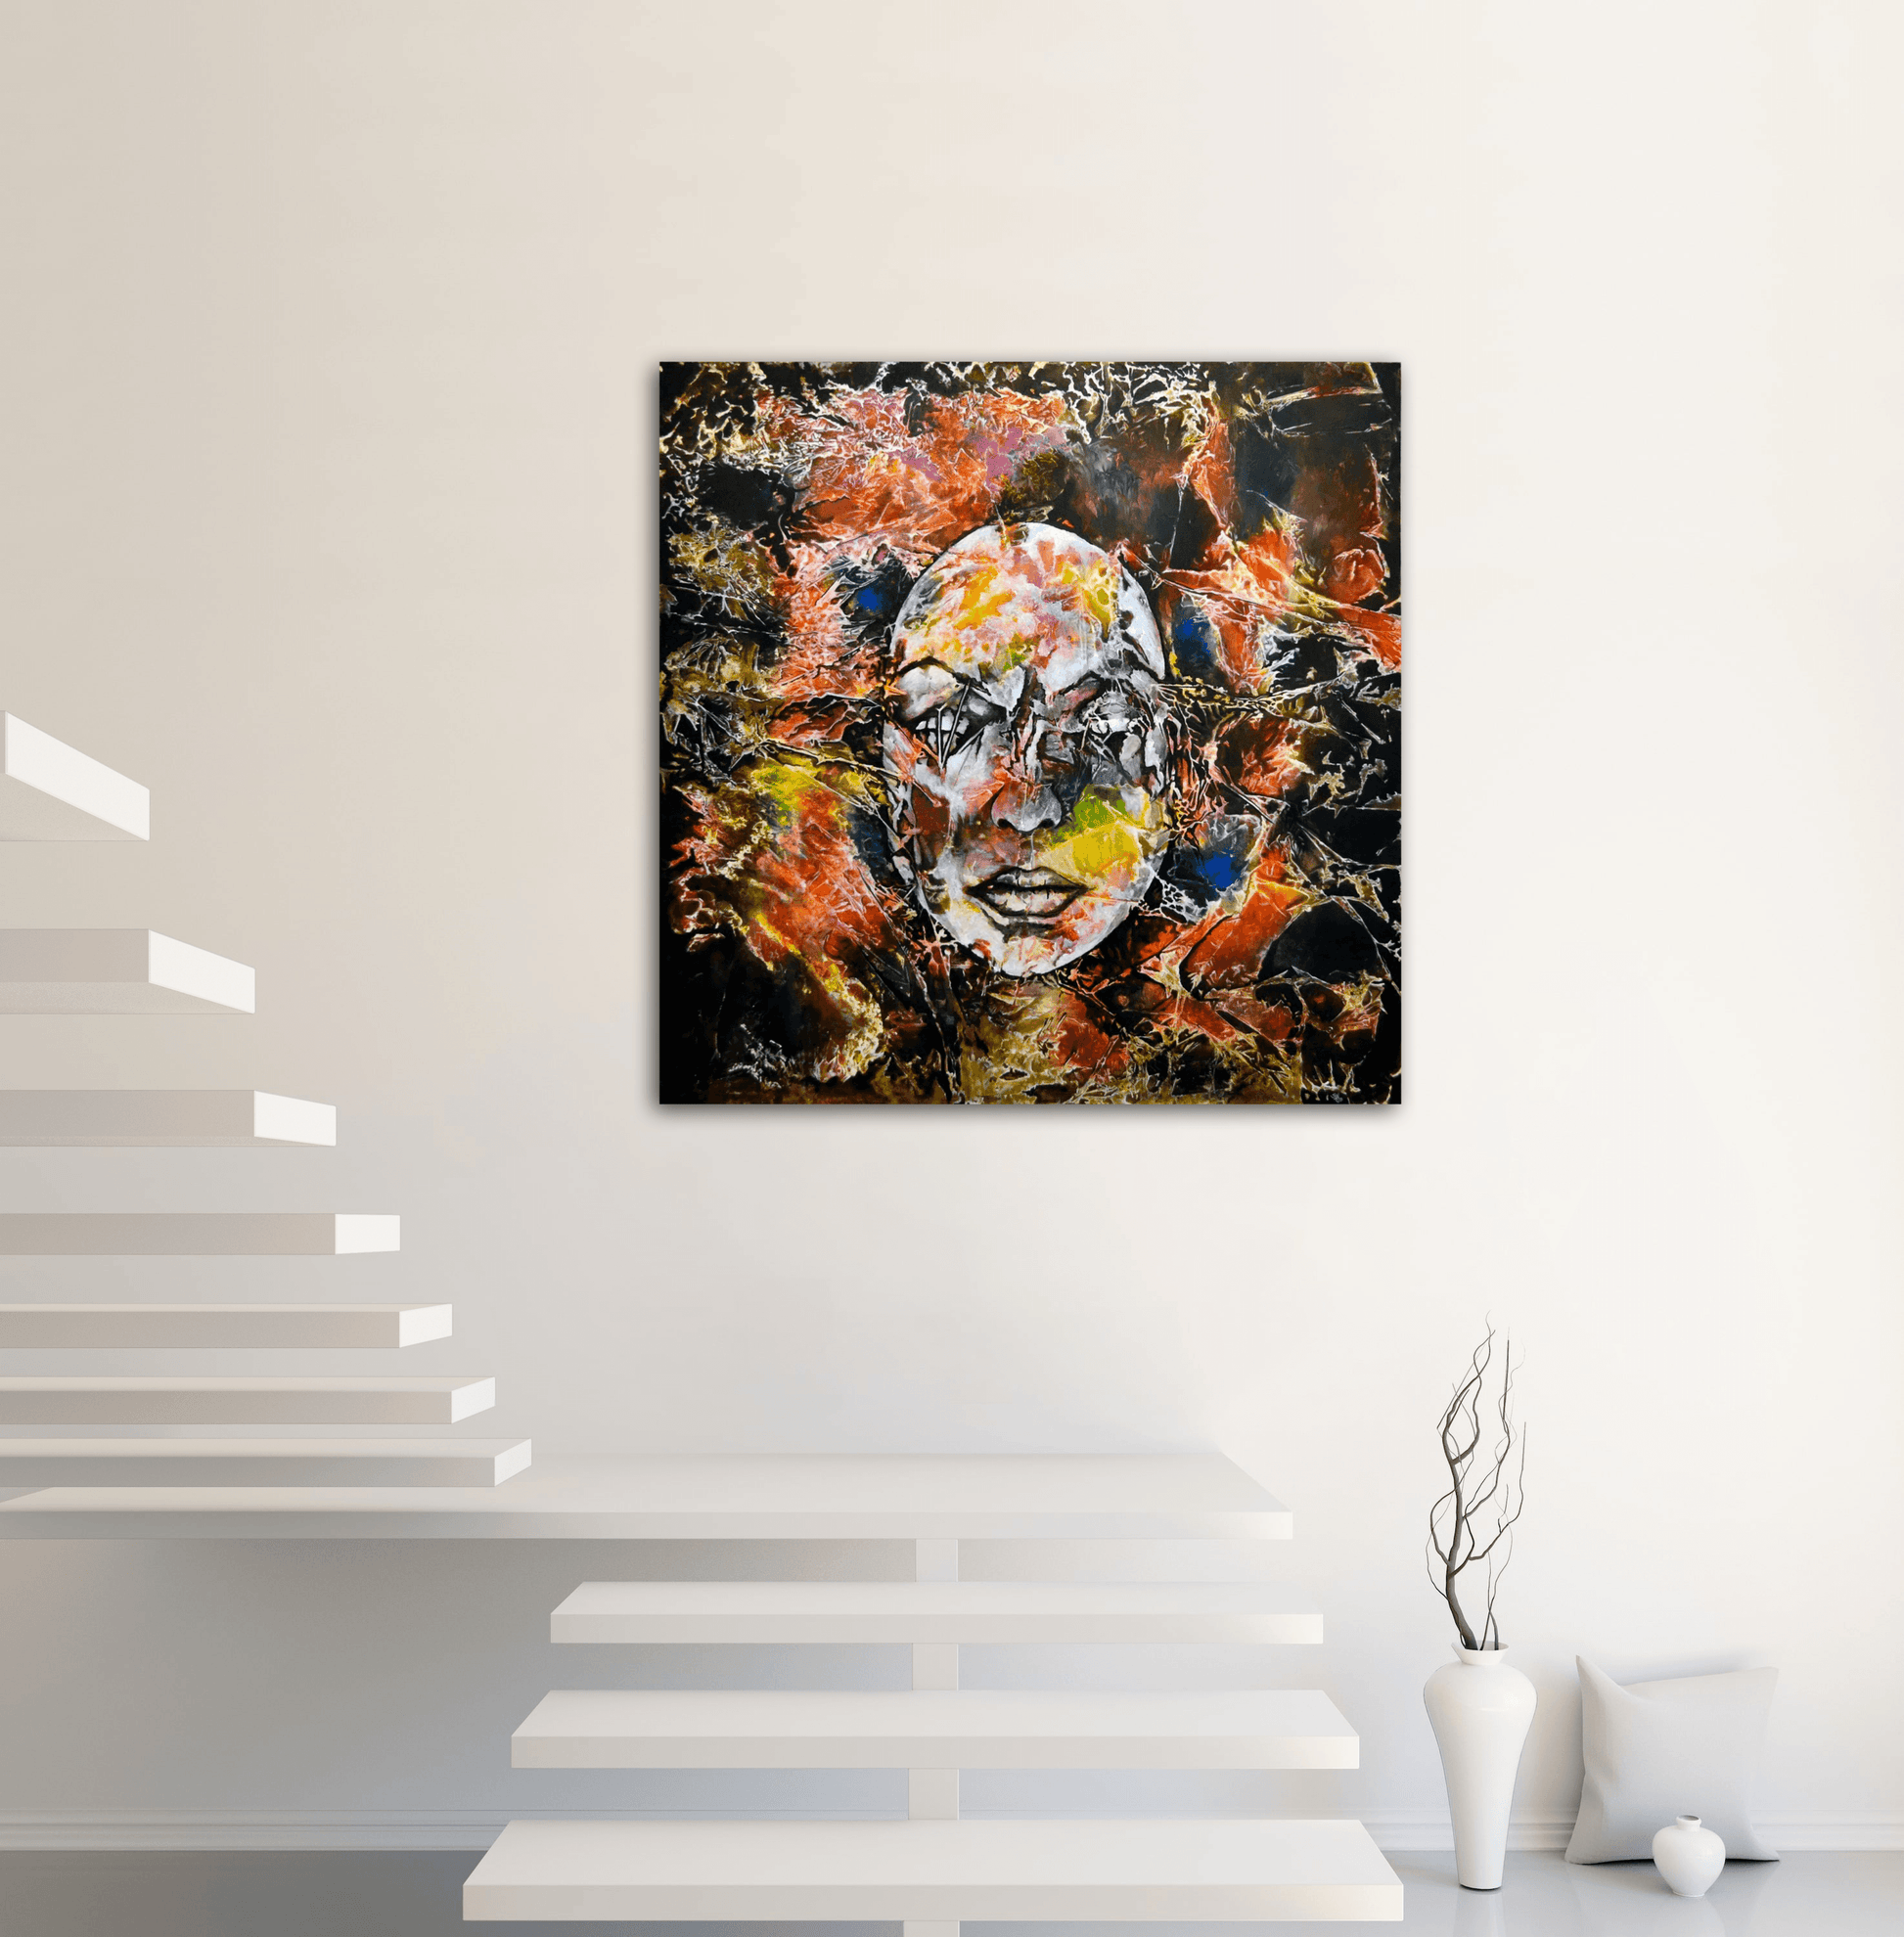 Broken Dreams - XL Abstract Painting on Canvas Ready to Hang - ArtCursor